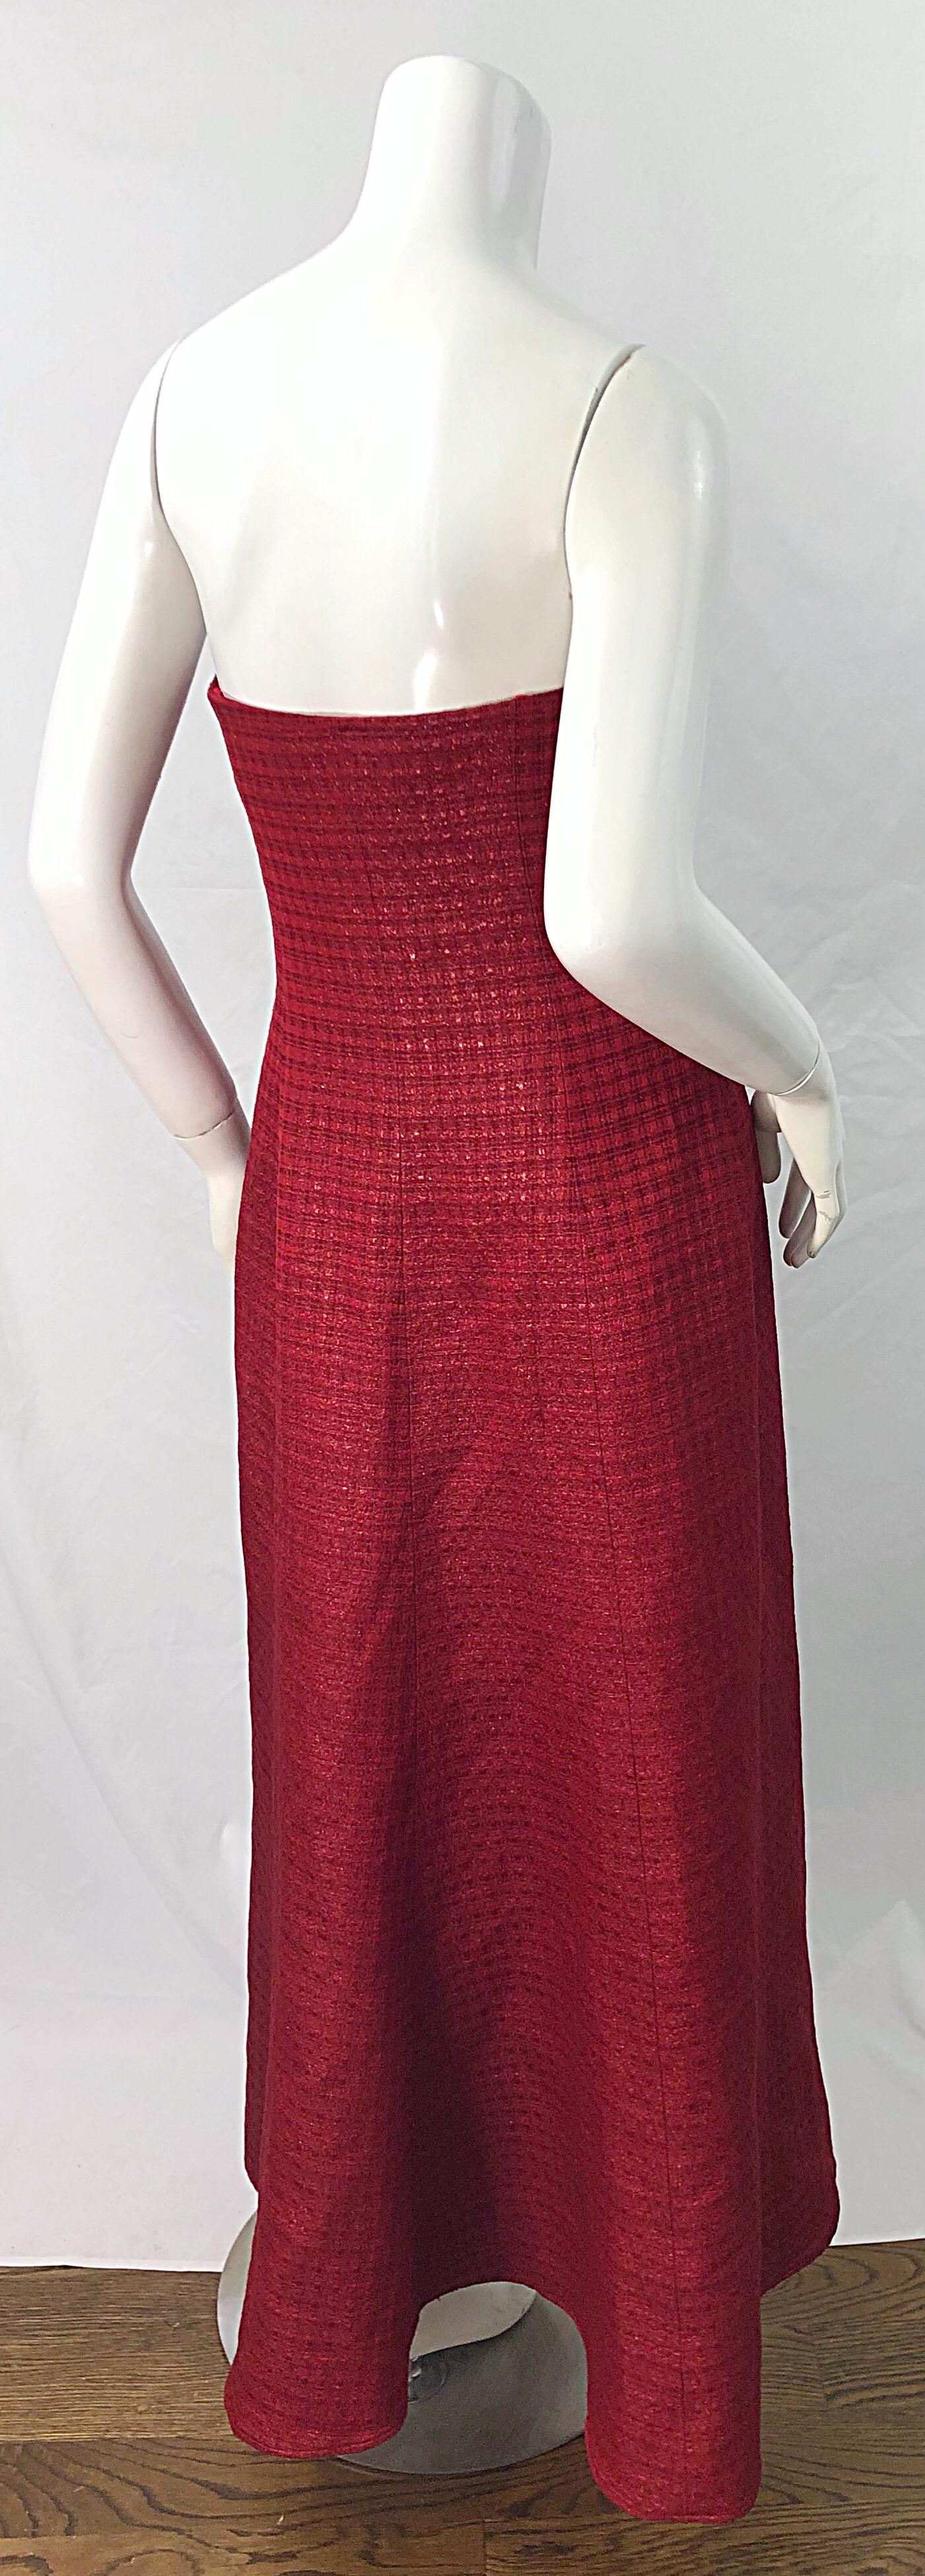 louis feraud vintage dress